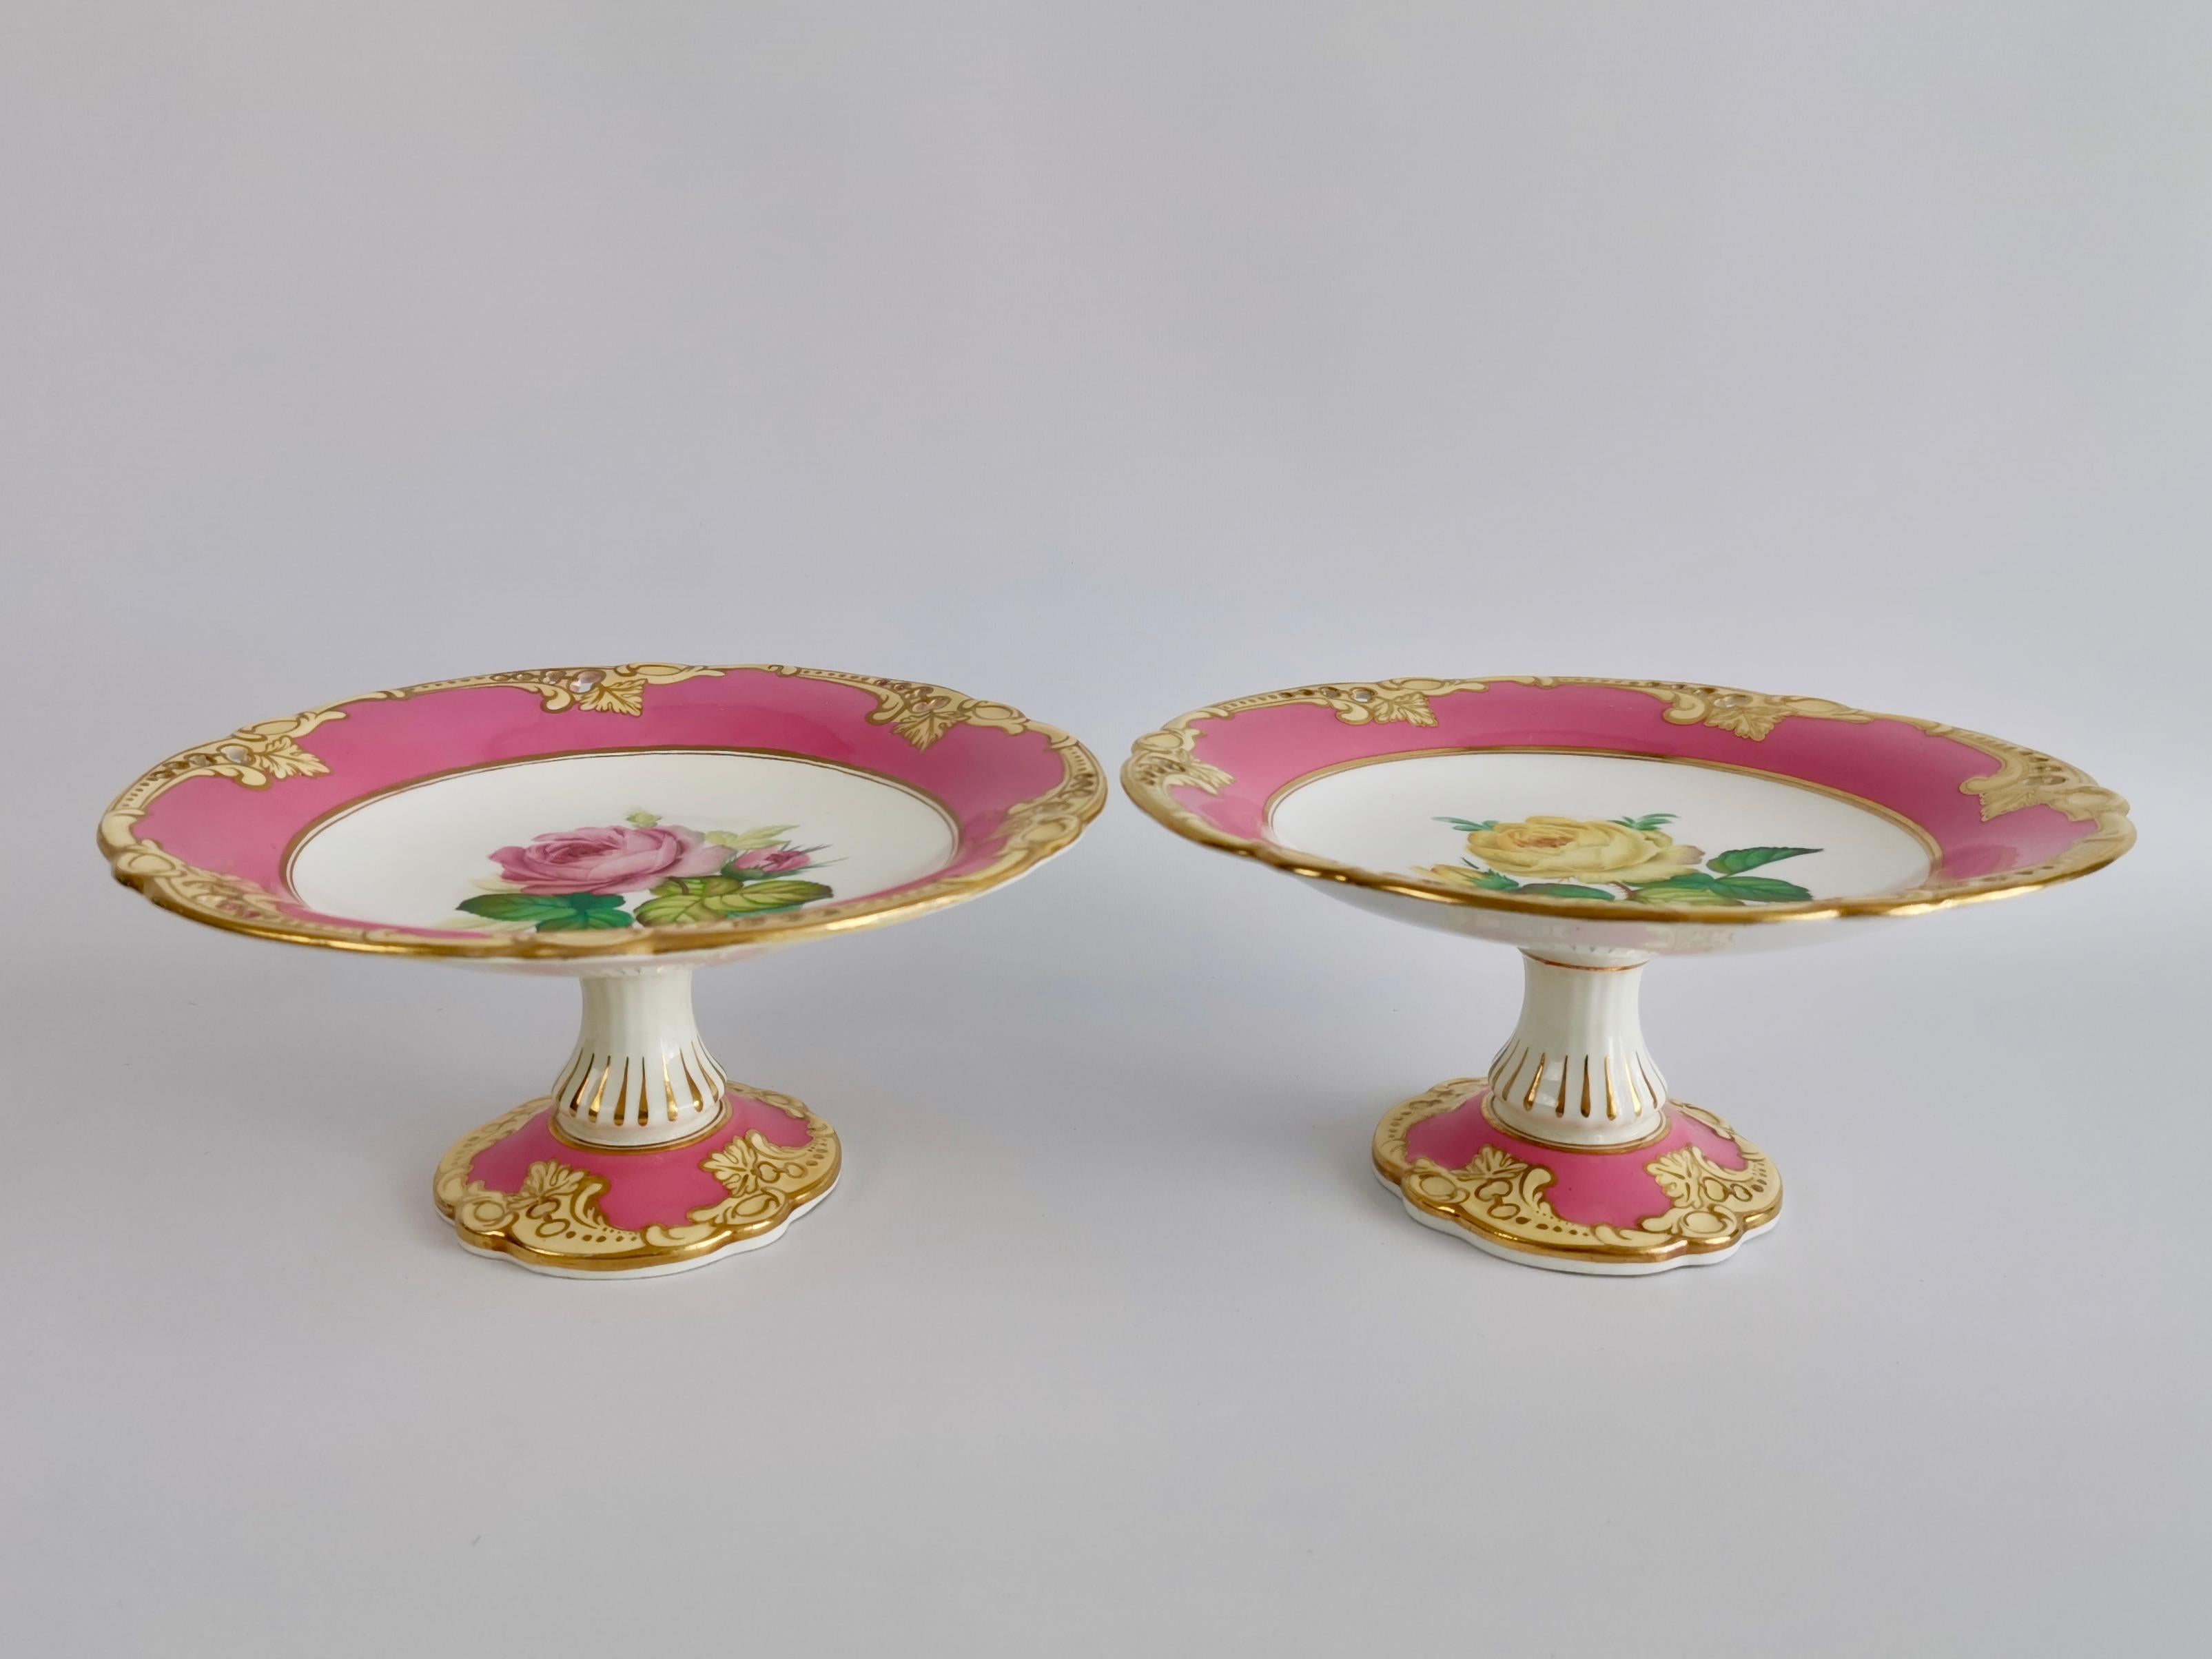 English Brown Westhead & Moore Porcelain Dessert Service, Hot Pink Botanical, circa 1860